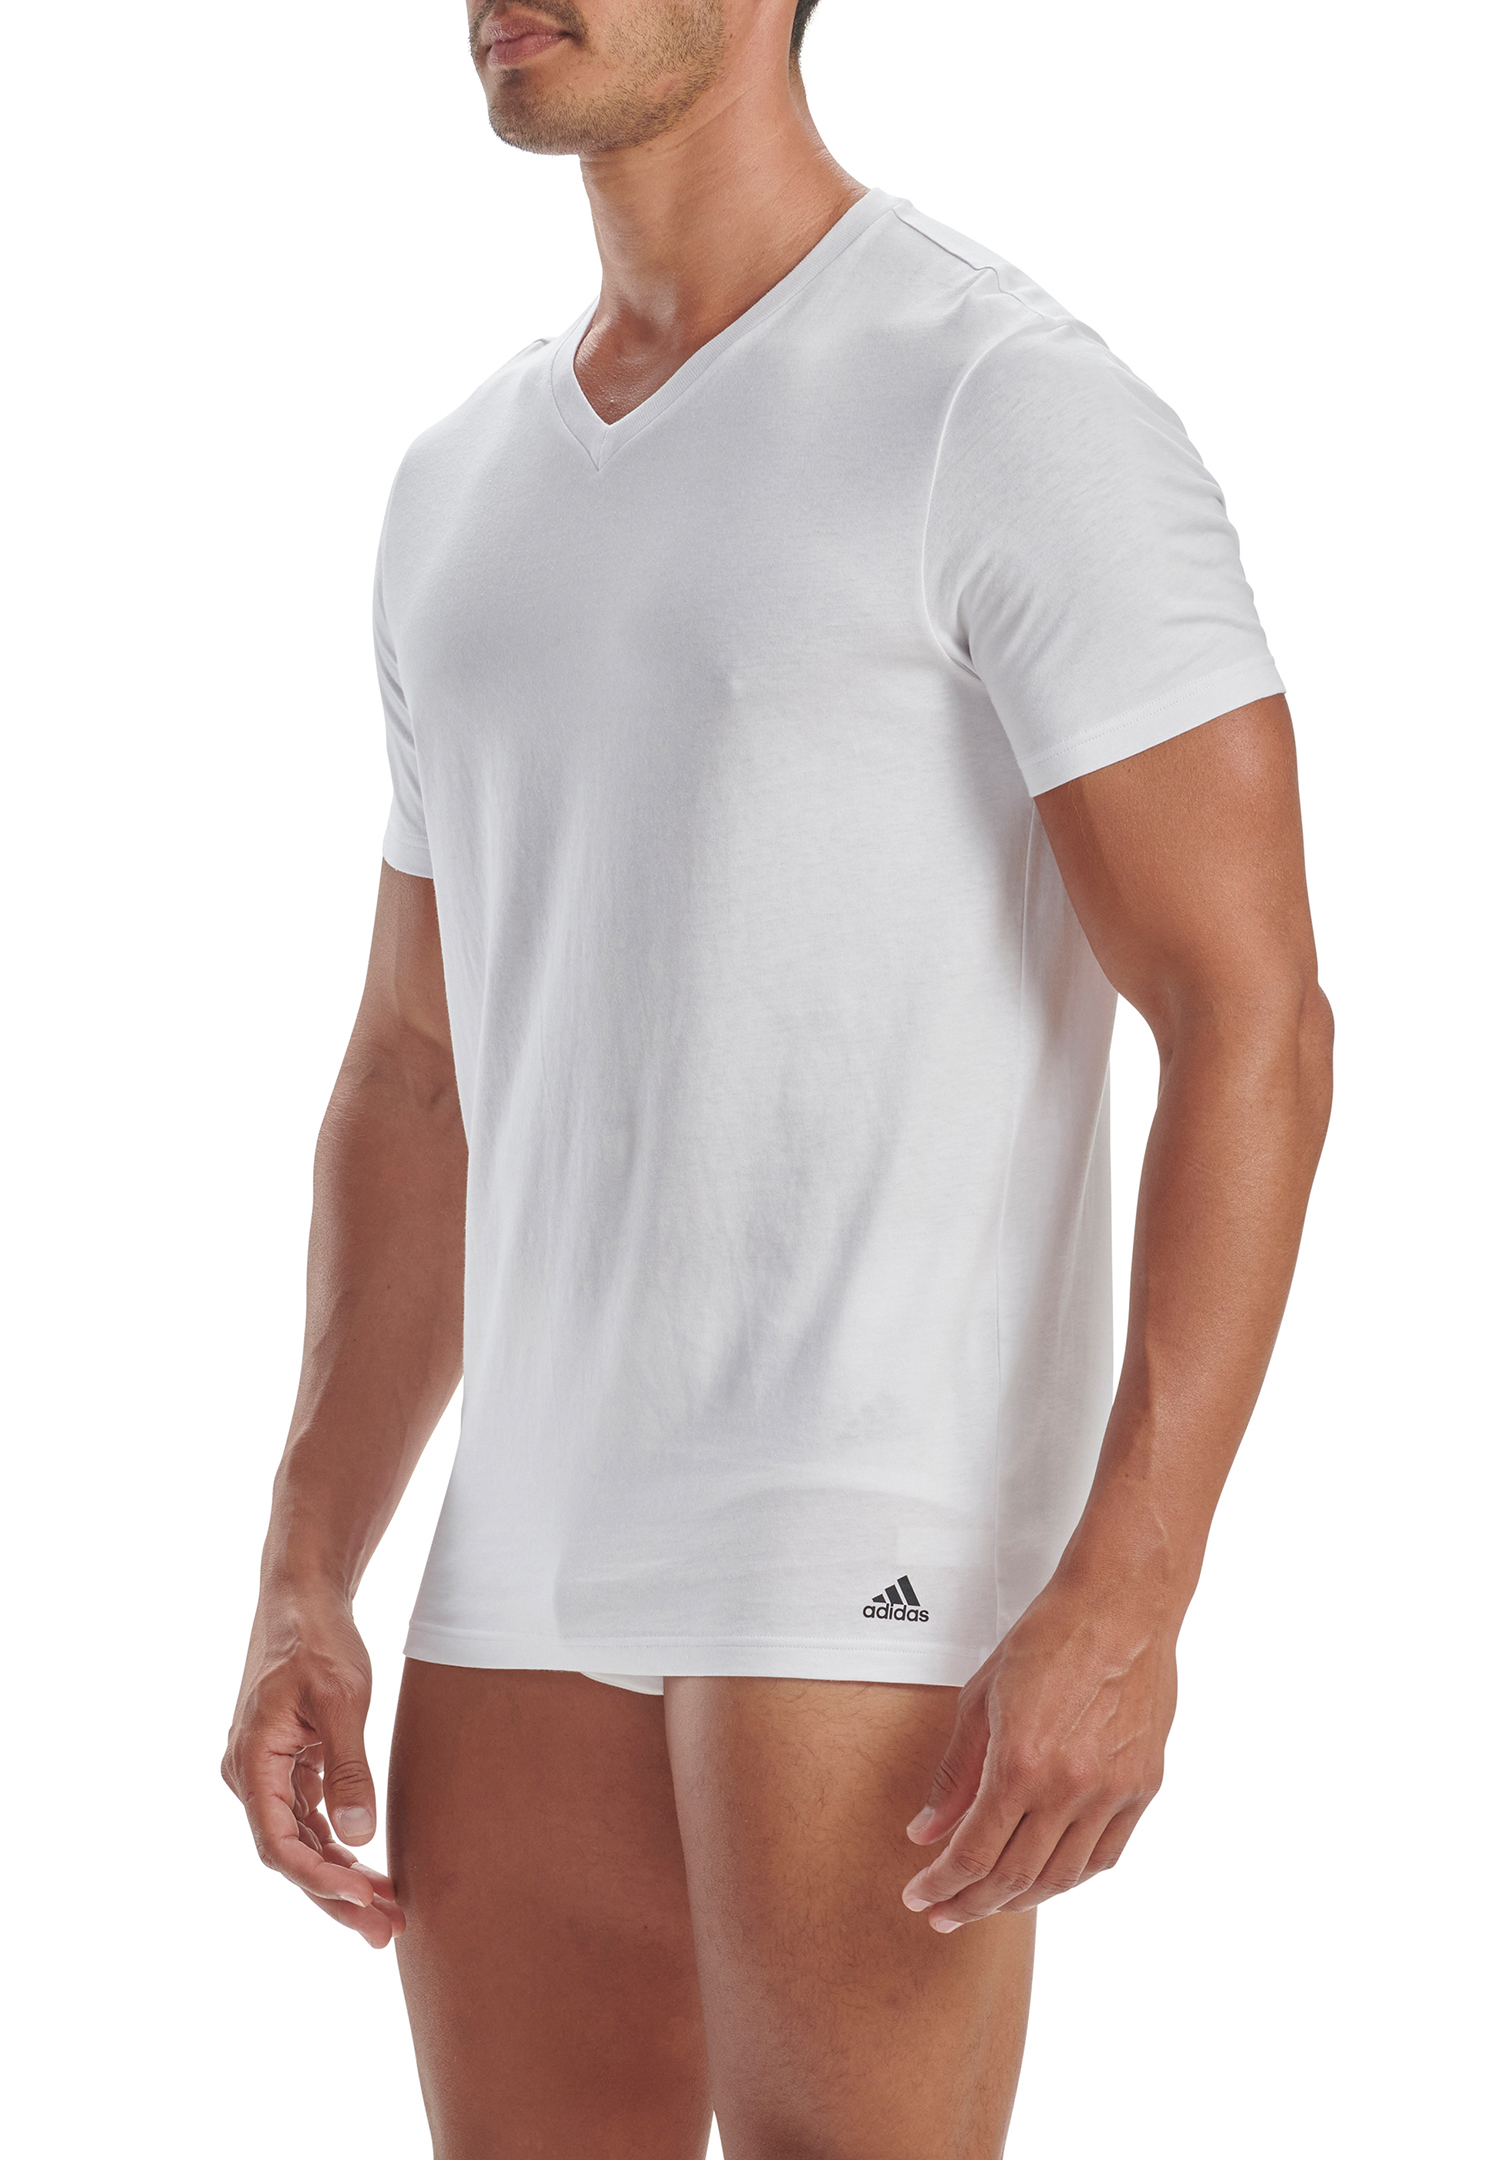 3 er Pack adidas V-Neck T-Shirt Herren Unterhemd V-Ausschnitt Baumwolle langlebig